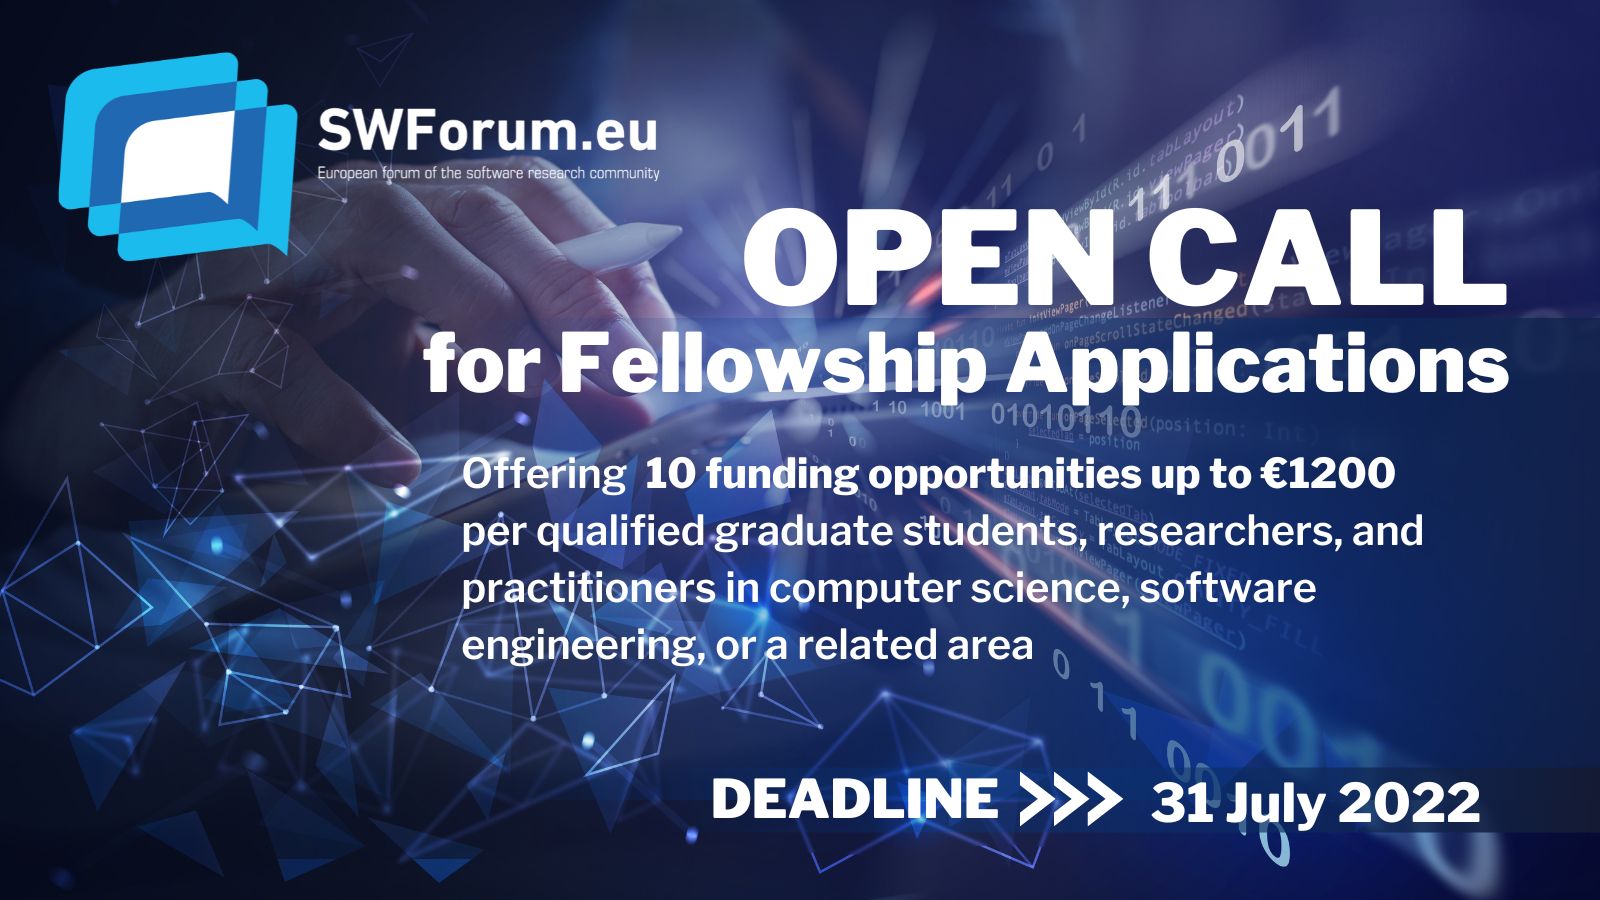 SWForum.eu Open Call for Fellowship Applications is now open!